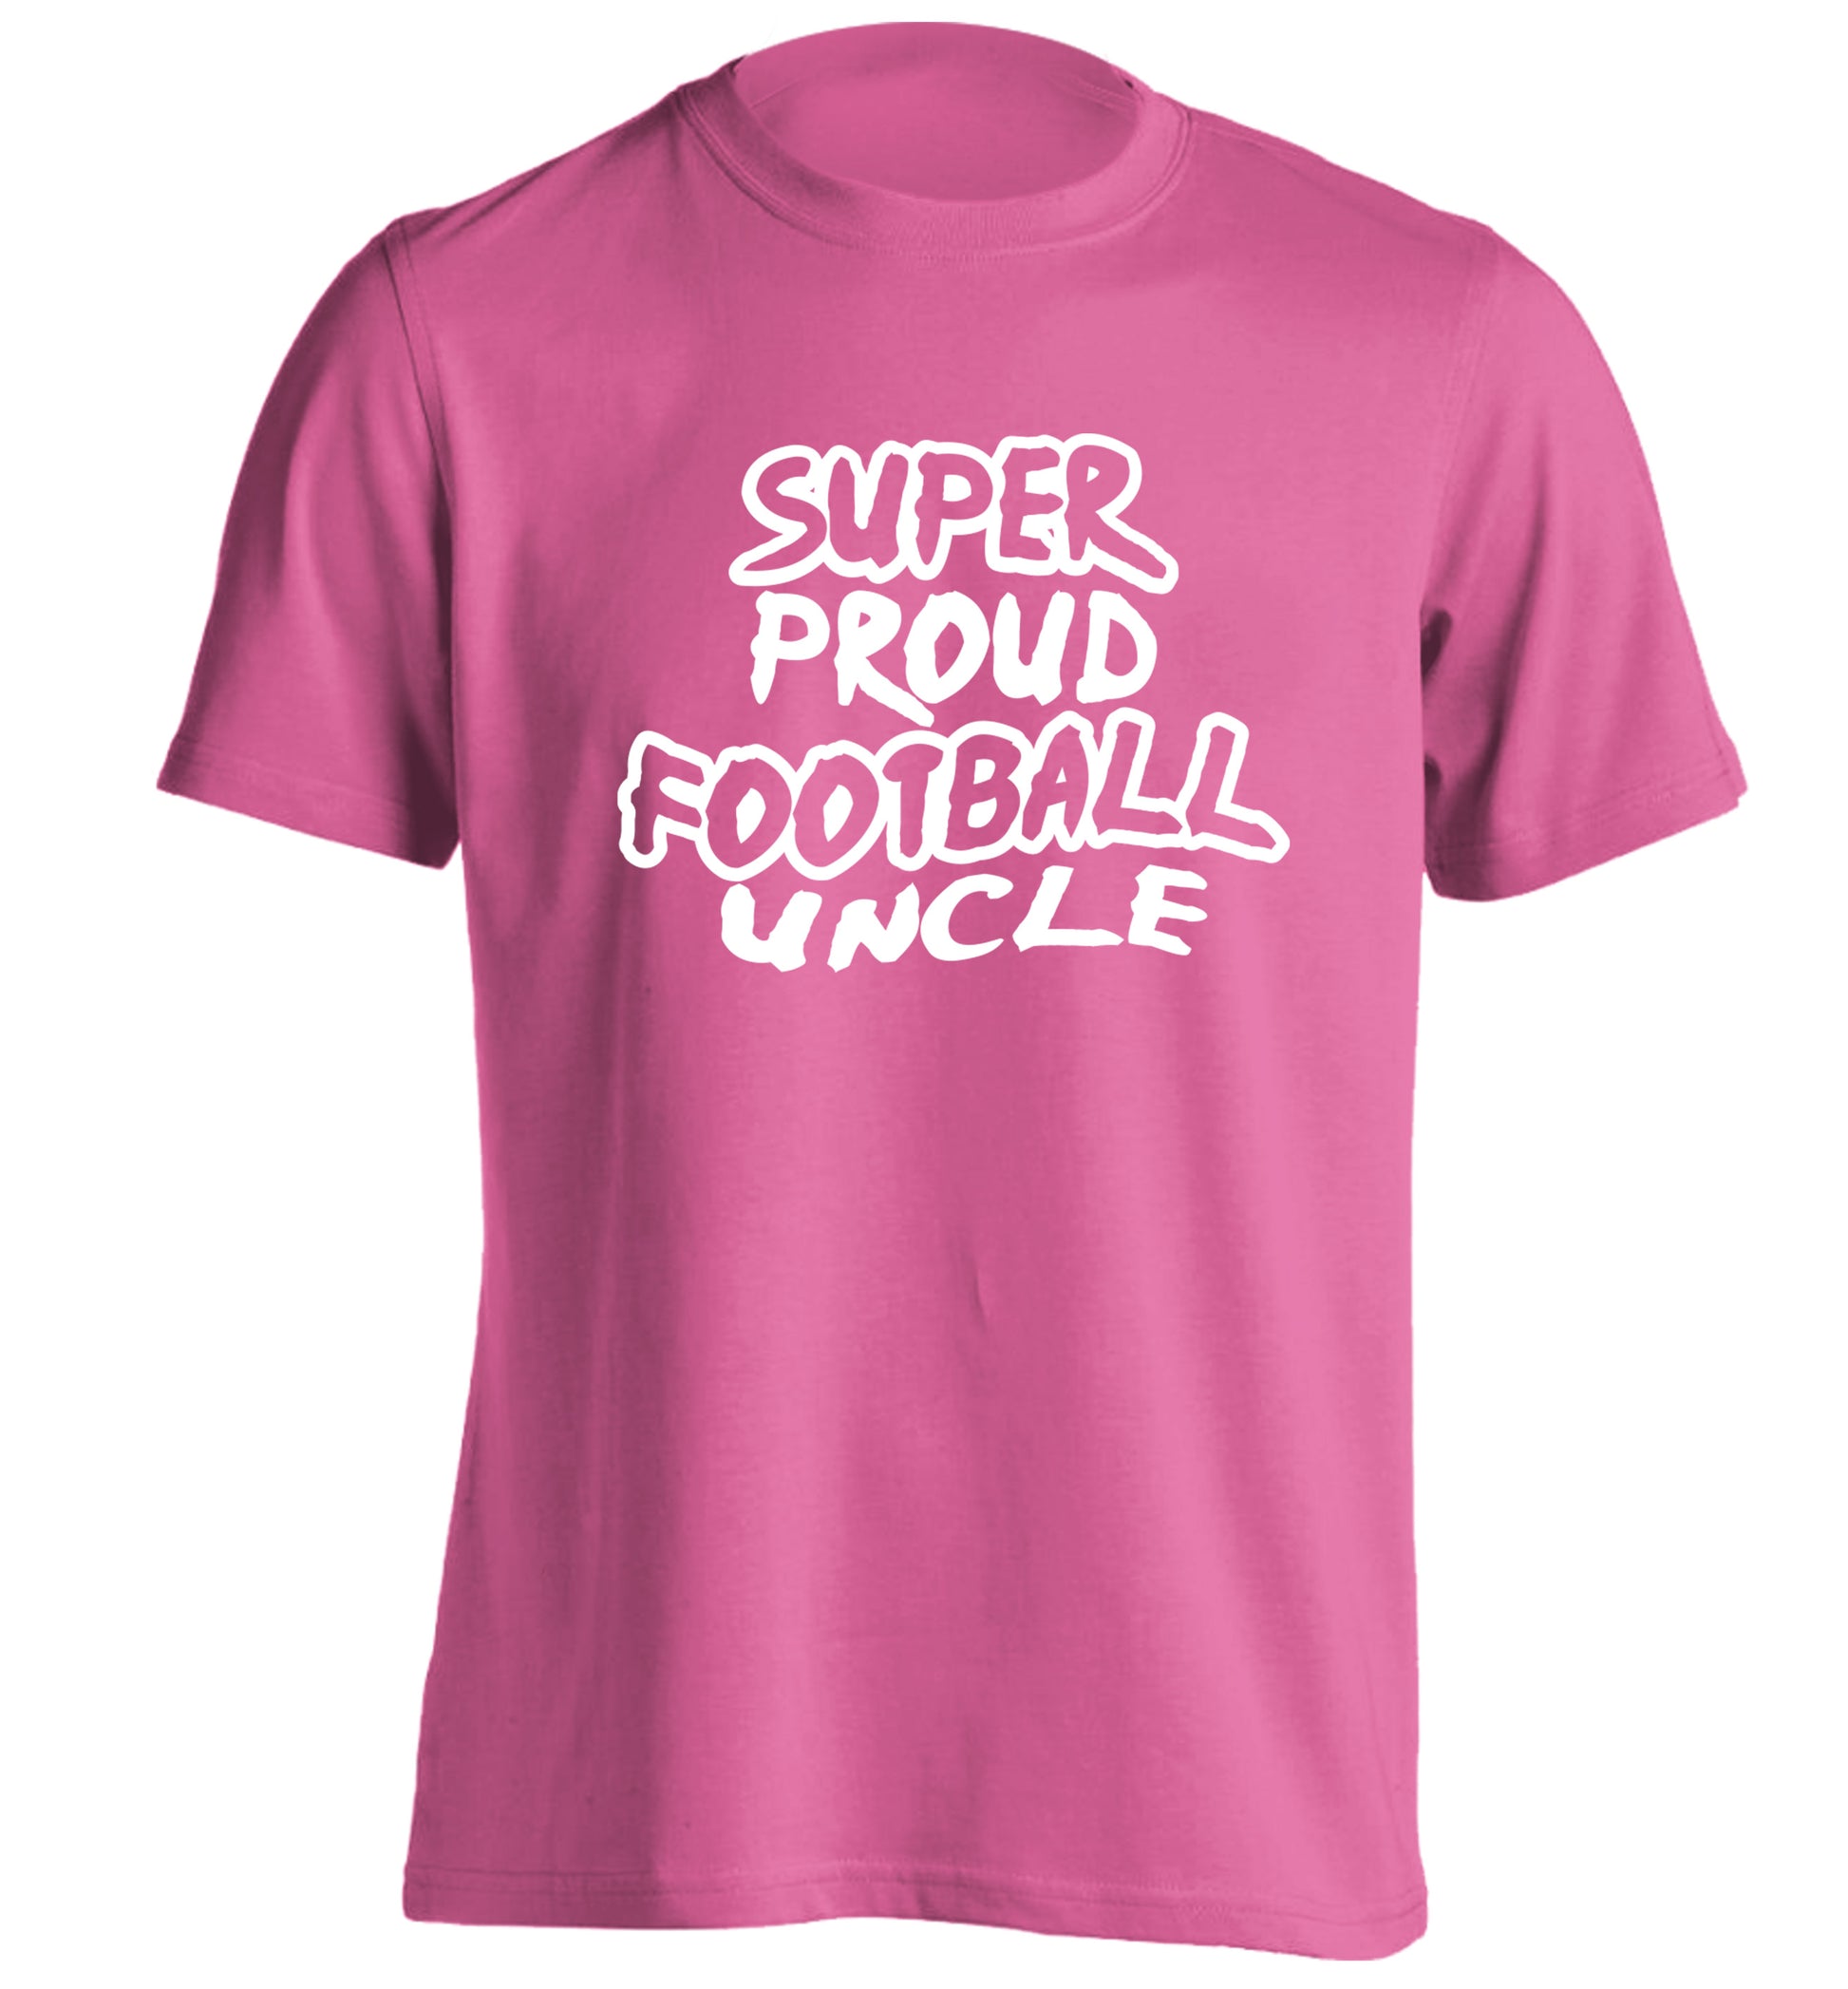 Super proud football uncle adults unisexpink Tshirt 2XL